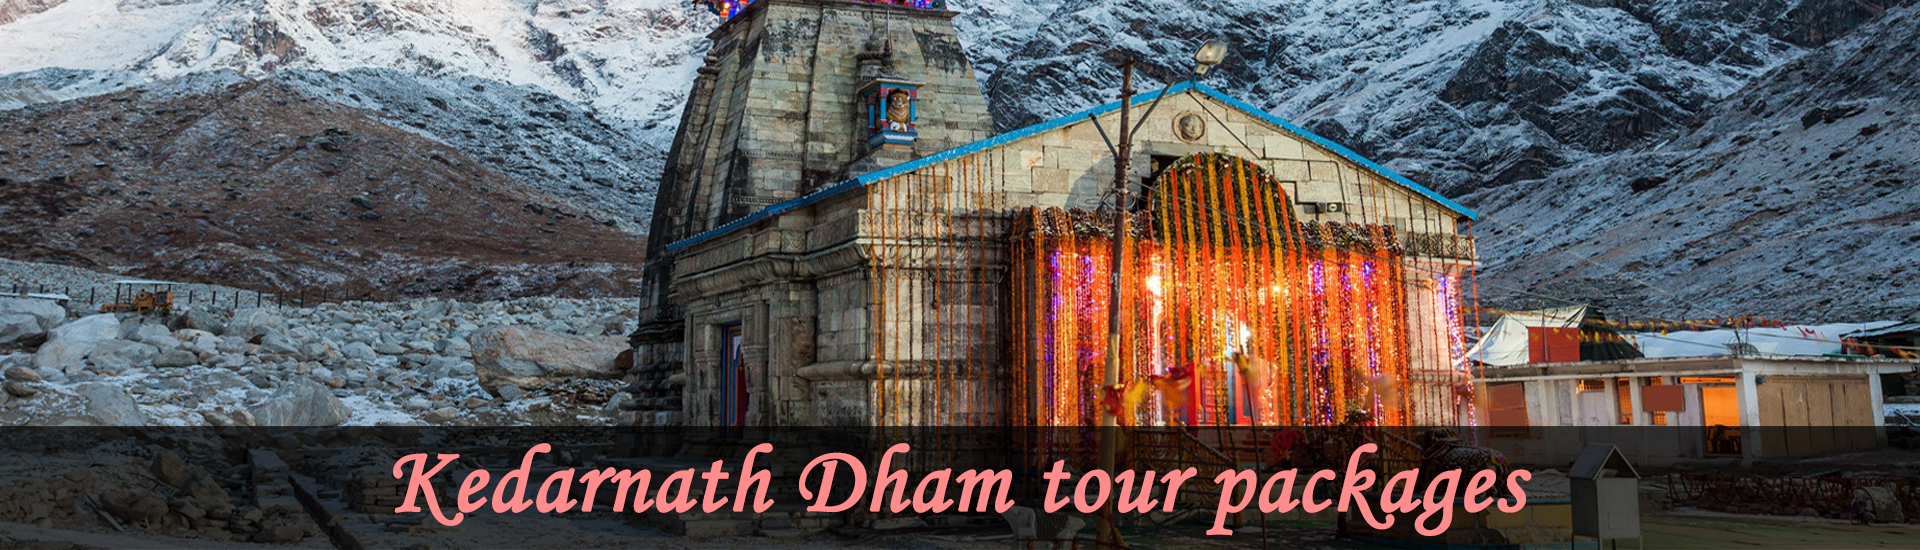 Kedarnath Tour Package, Kedarnath Dham Yatra